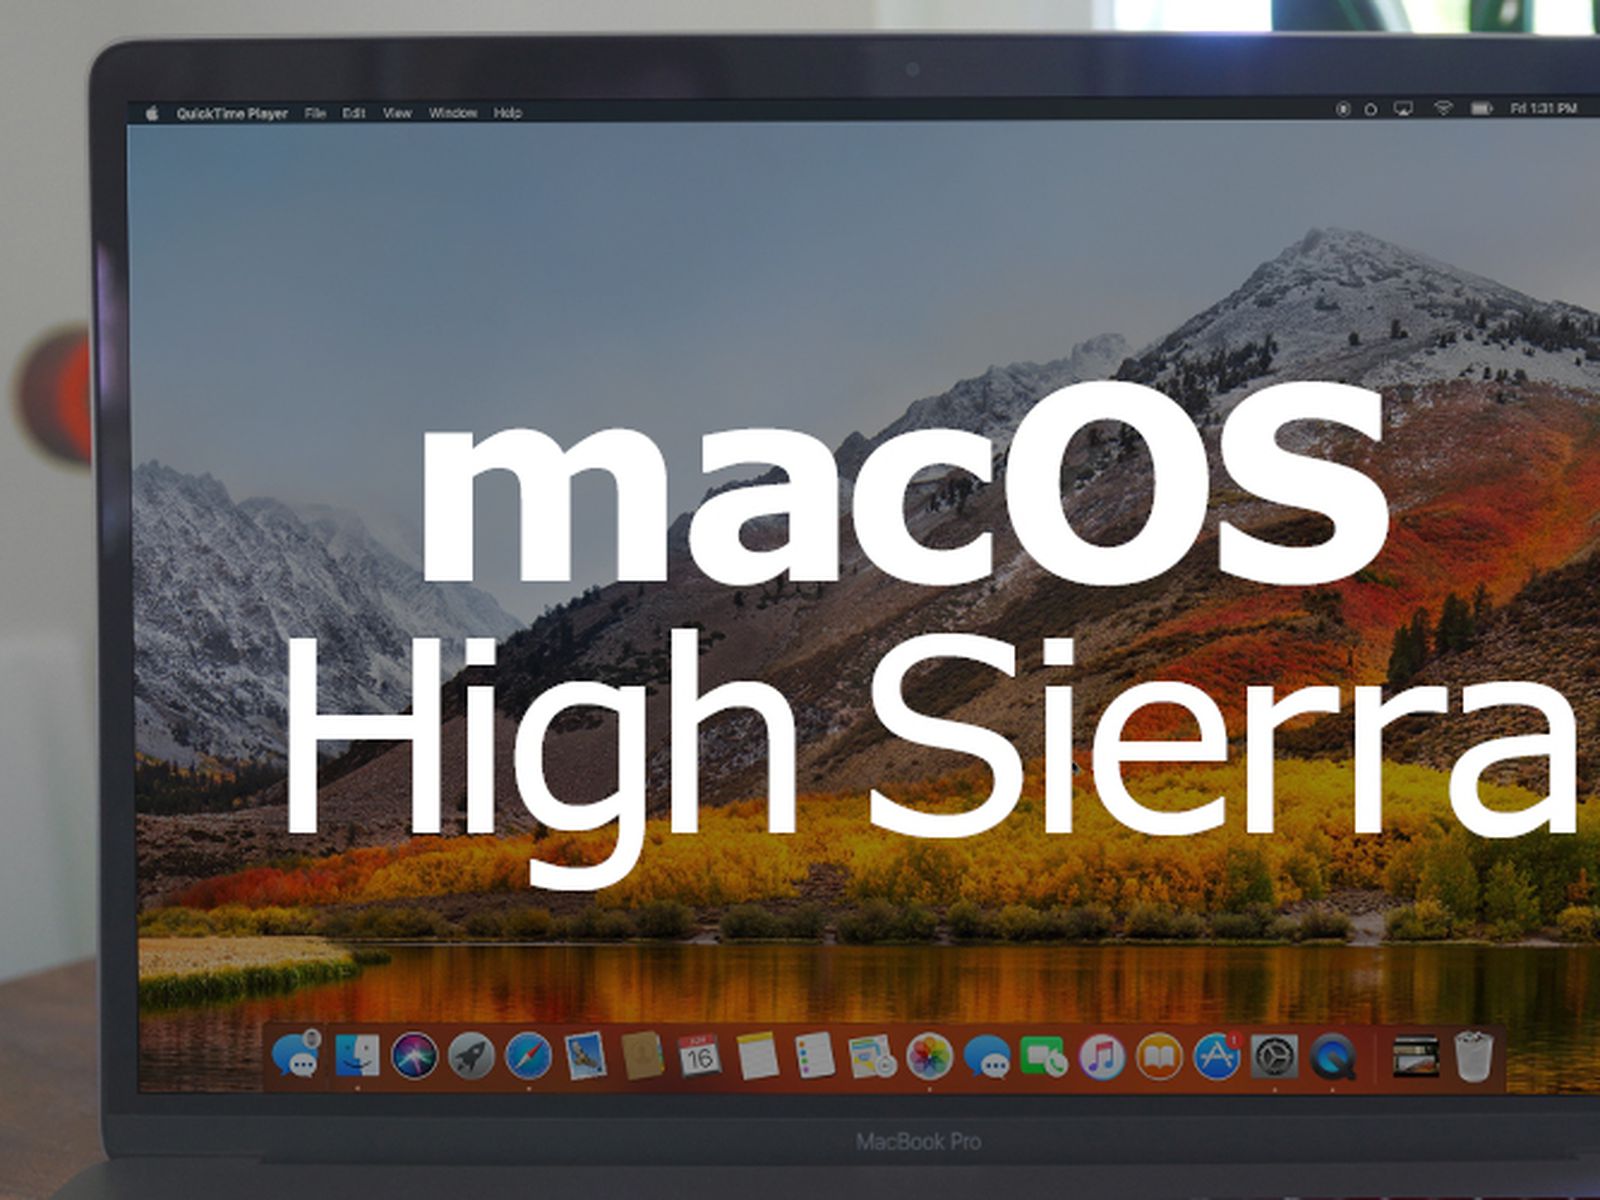 canon composite software for mac os high sierra